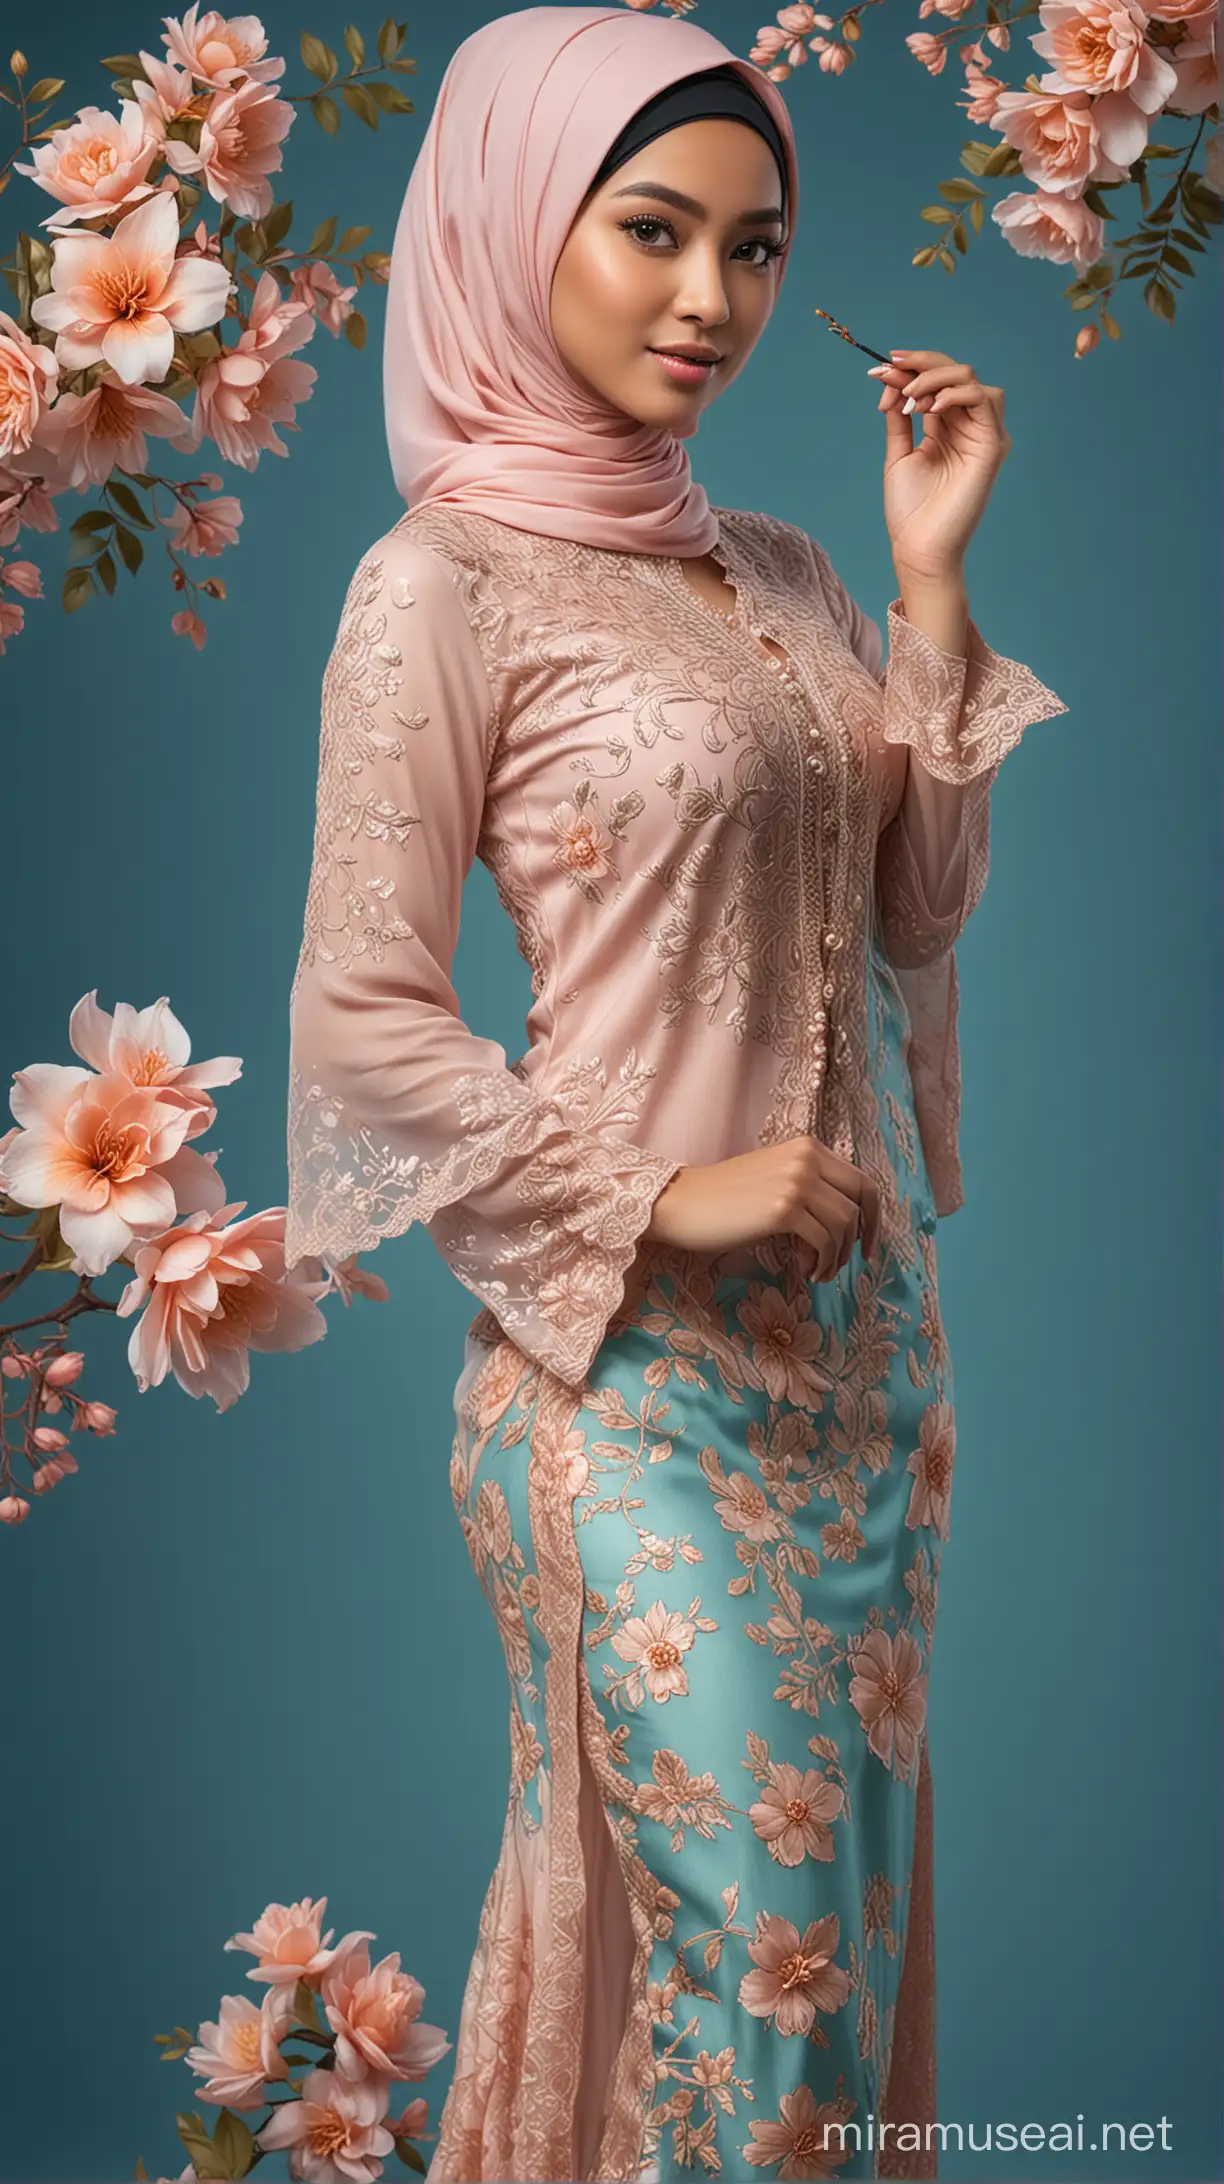 Elegant Malay Lady in Sea Blue and Peach Kebaya Against Professional Blue Background